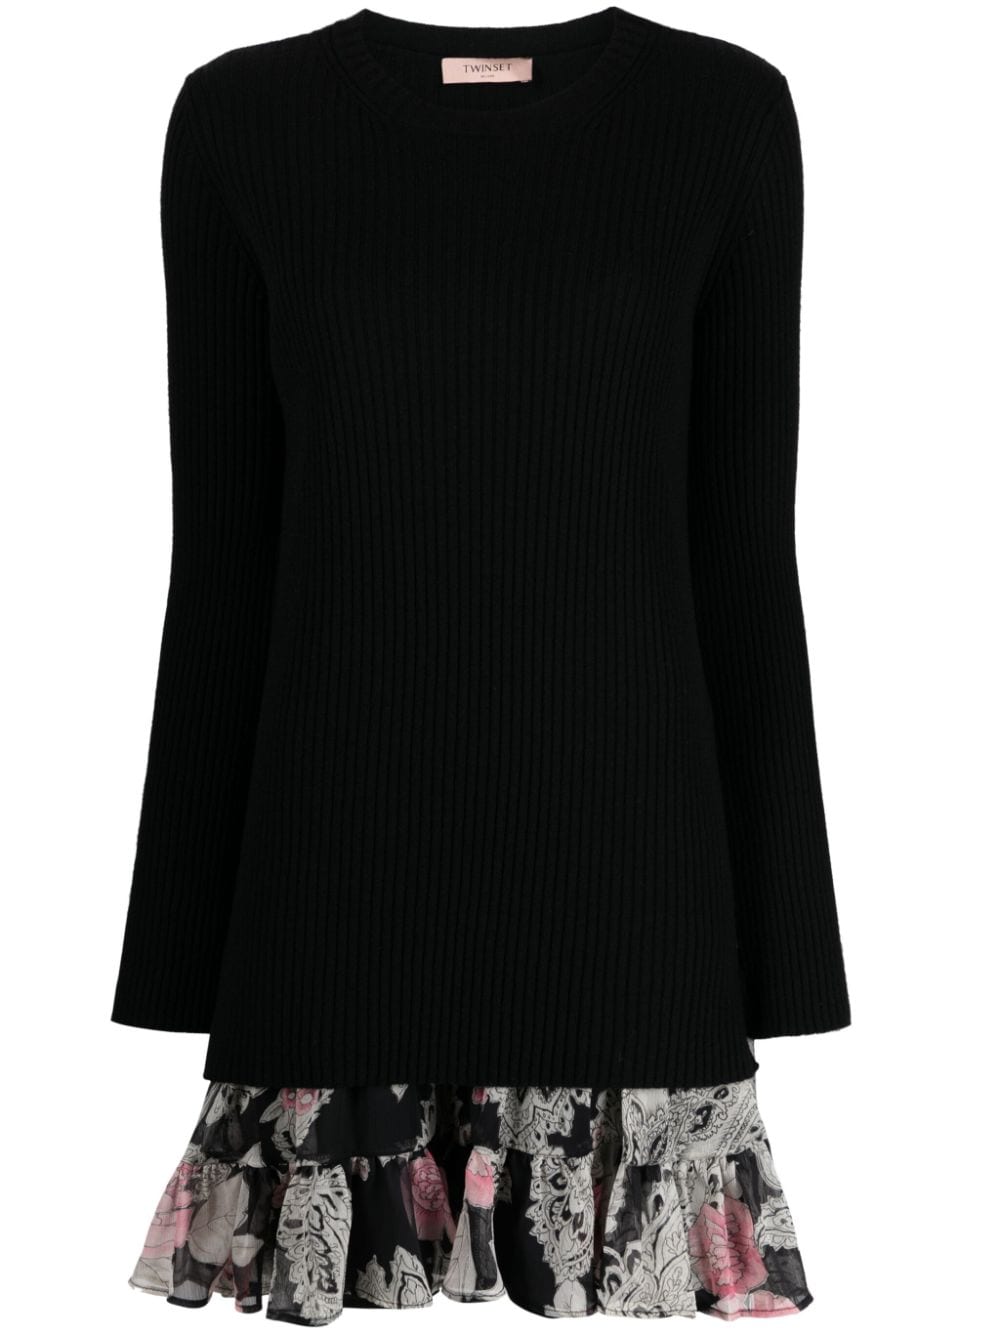 Image 1 of TWINSET long-sleeve jumper dress